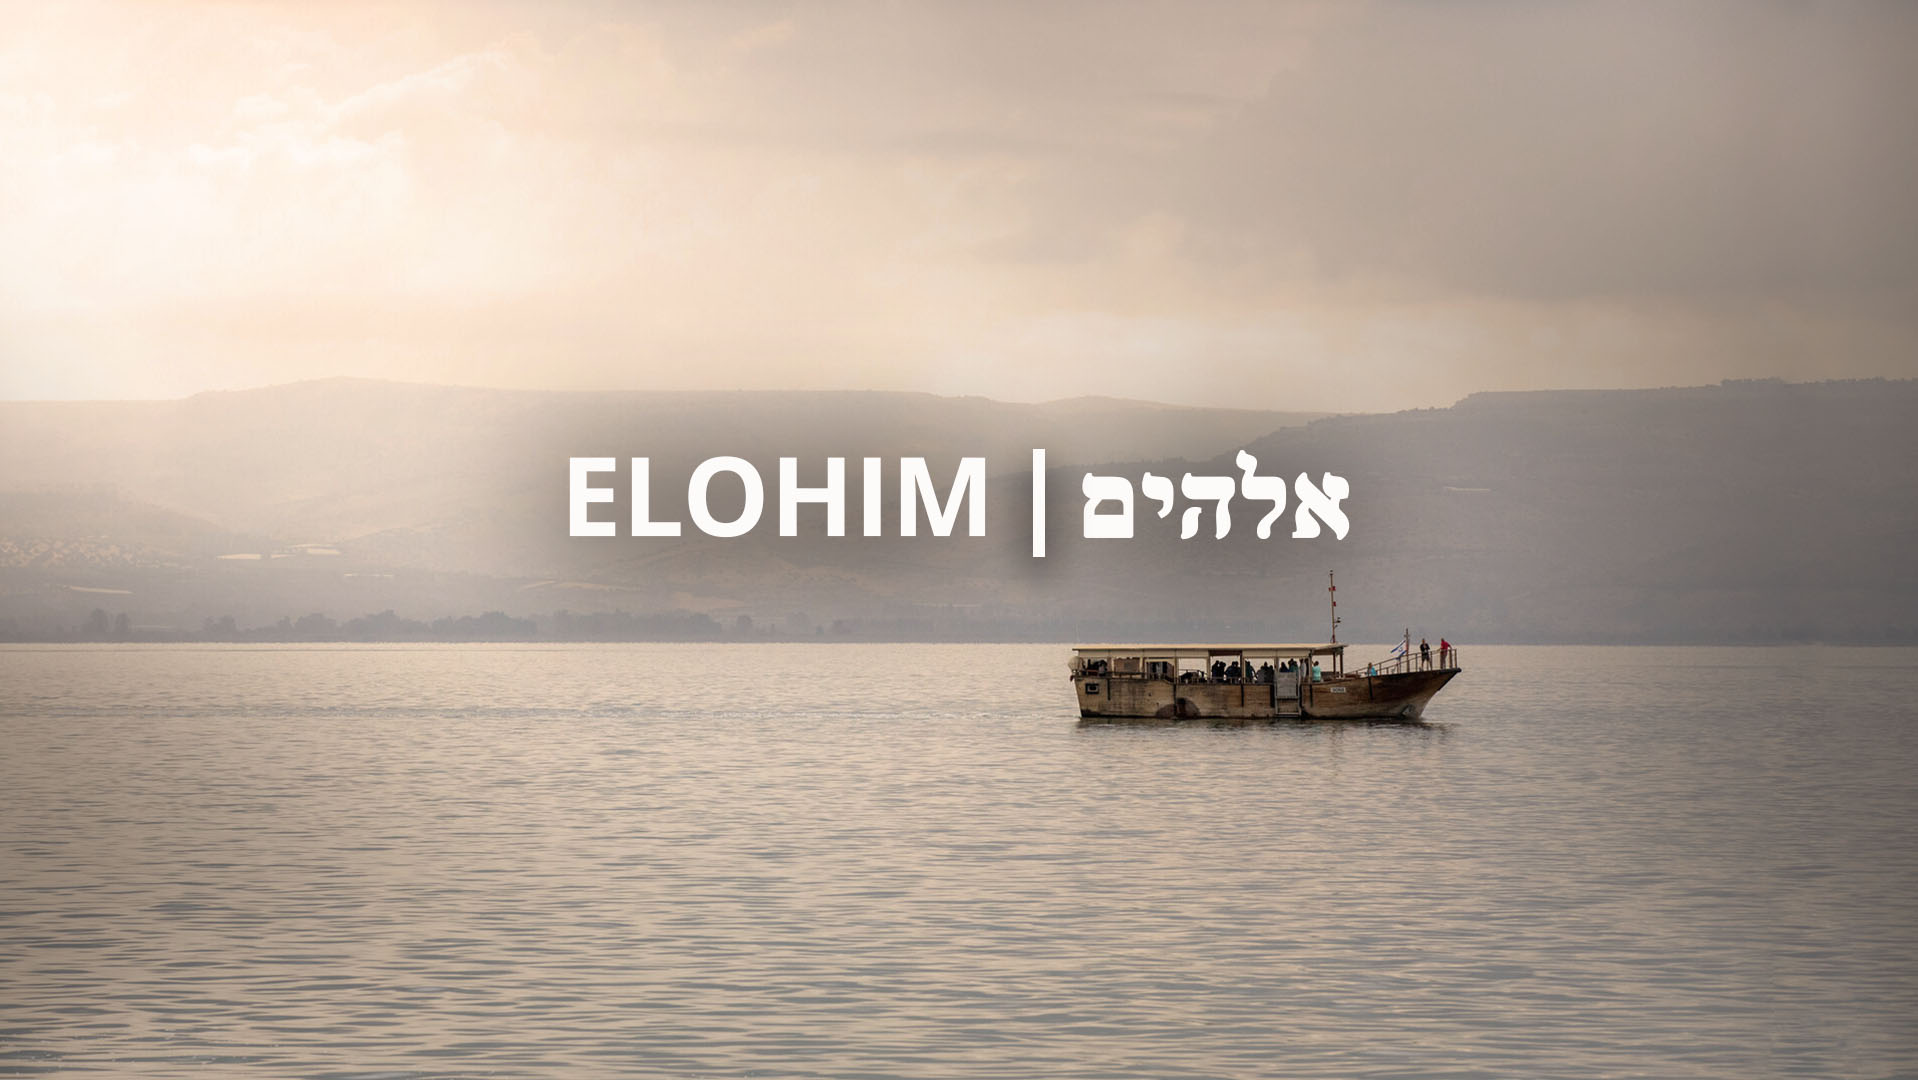 Names of God Elohim, Rabbi Jason Sobel